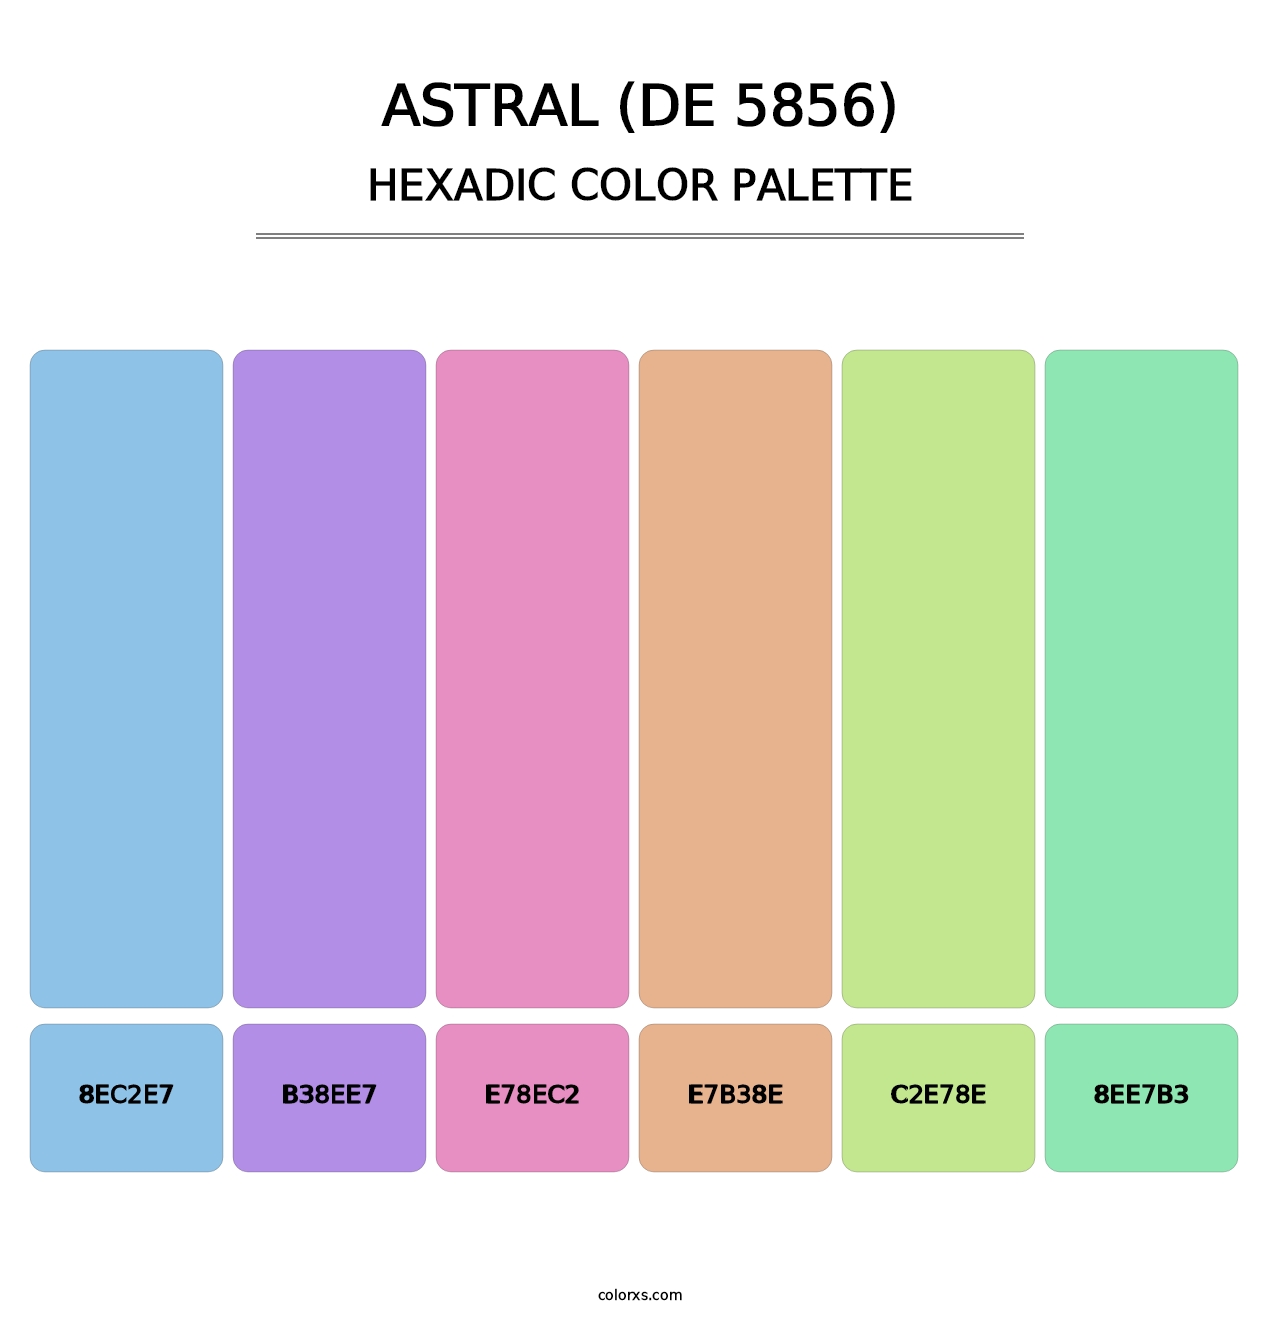 Astral (DE 5856) - Hexadic Color Palette